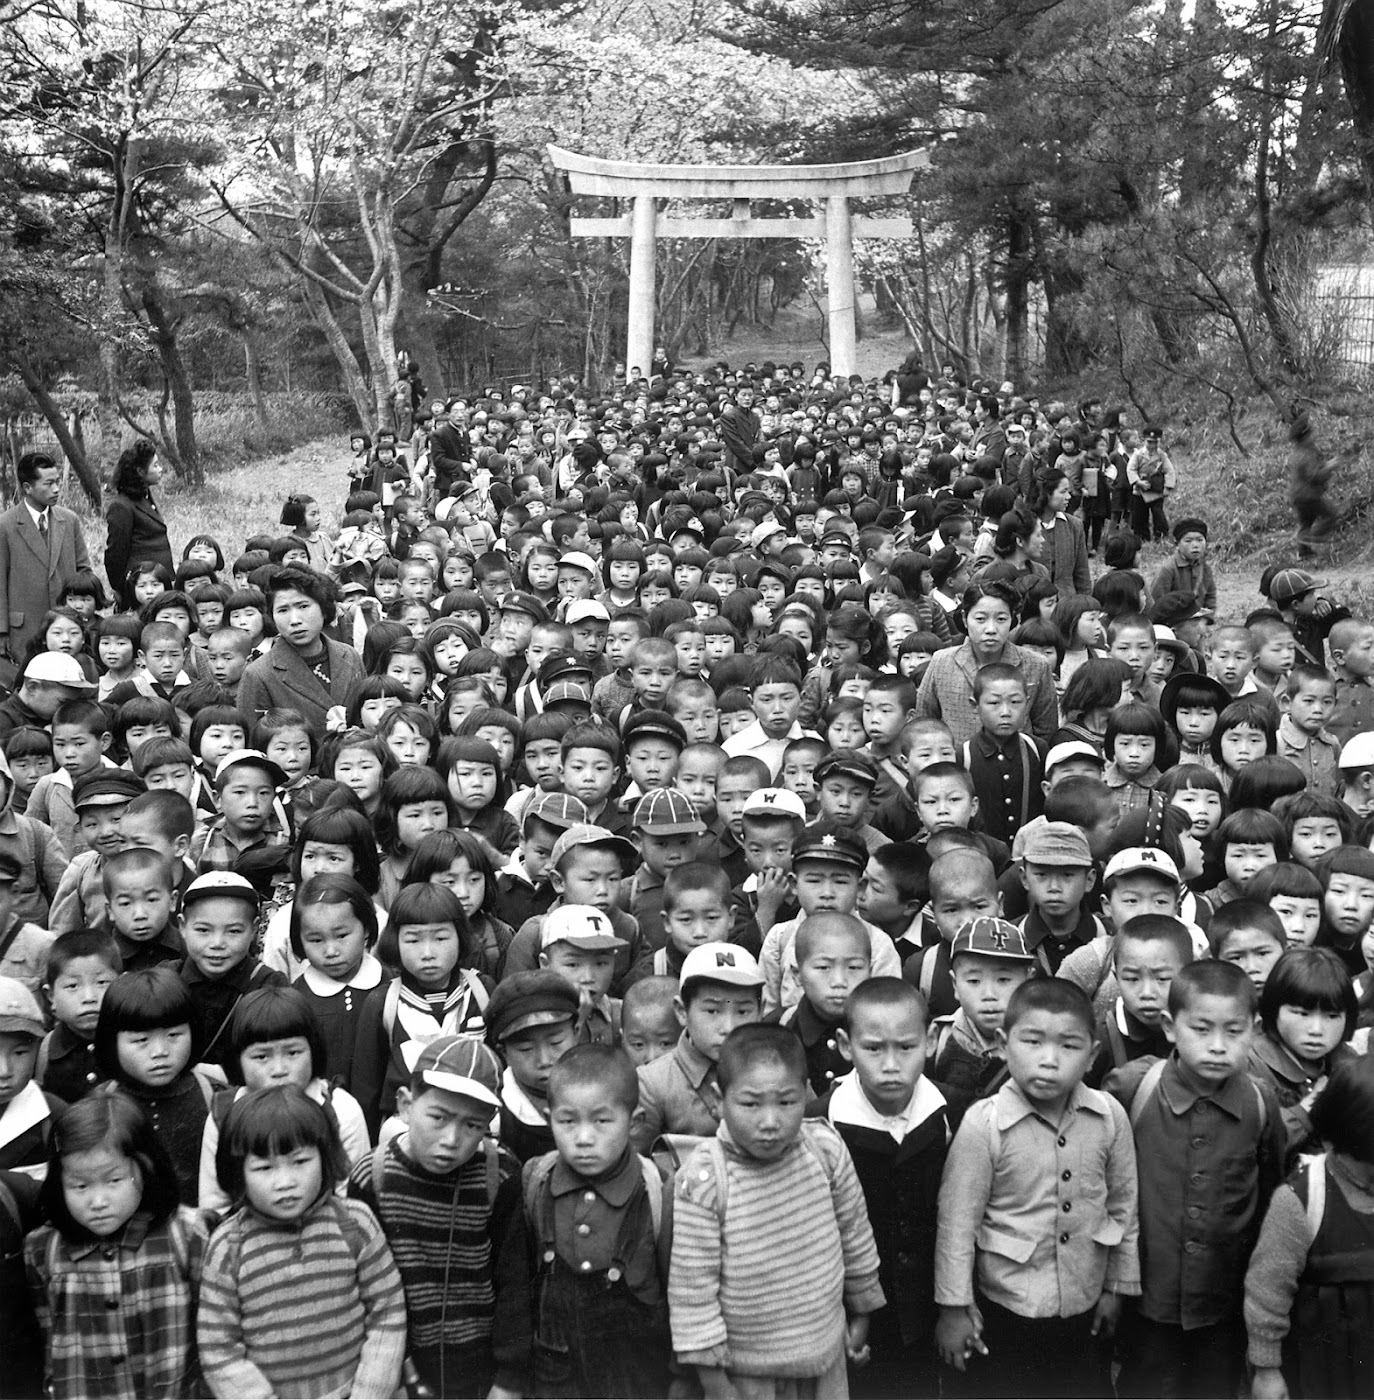 hird Graders of Funabashi Elementary School